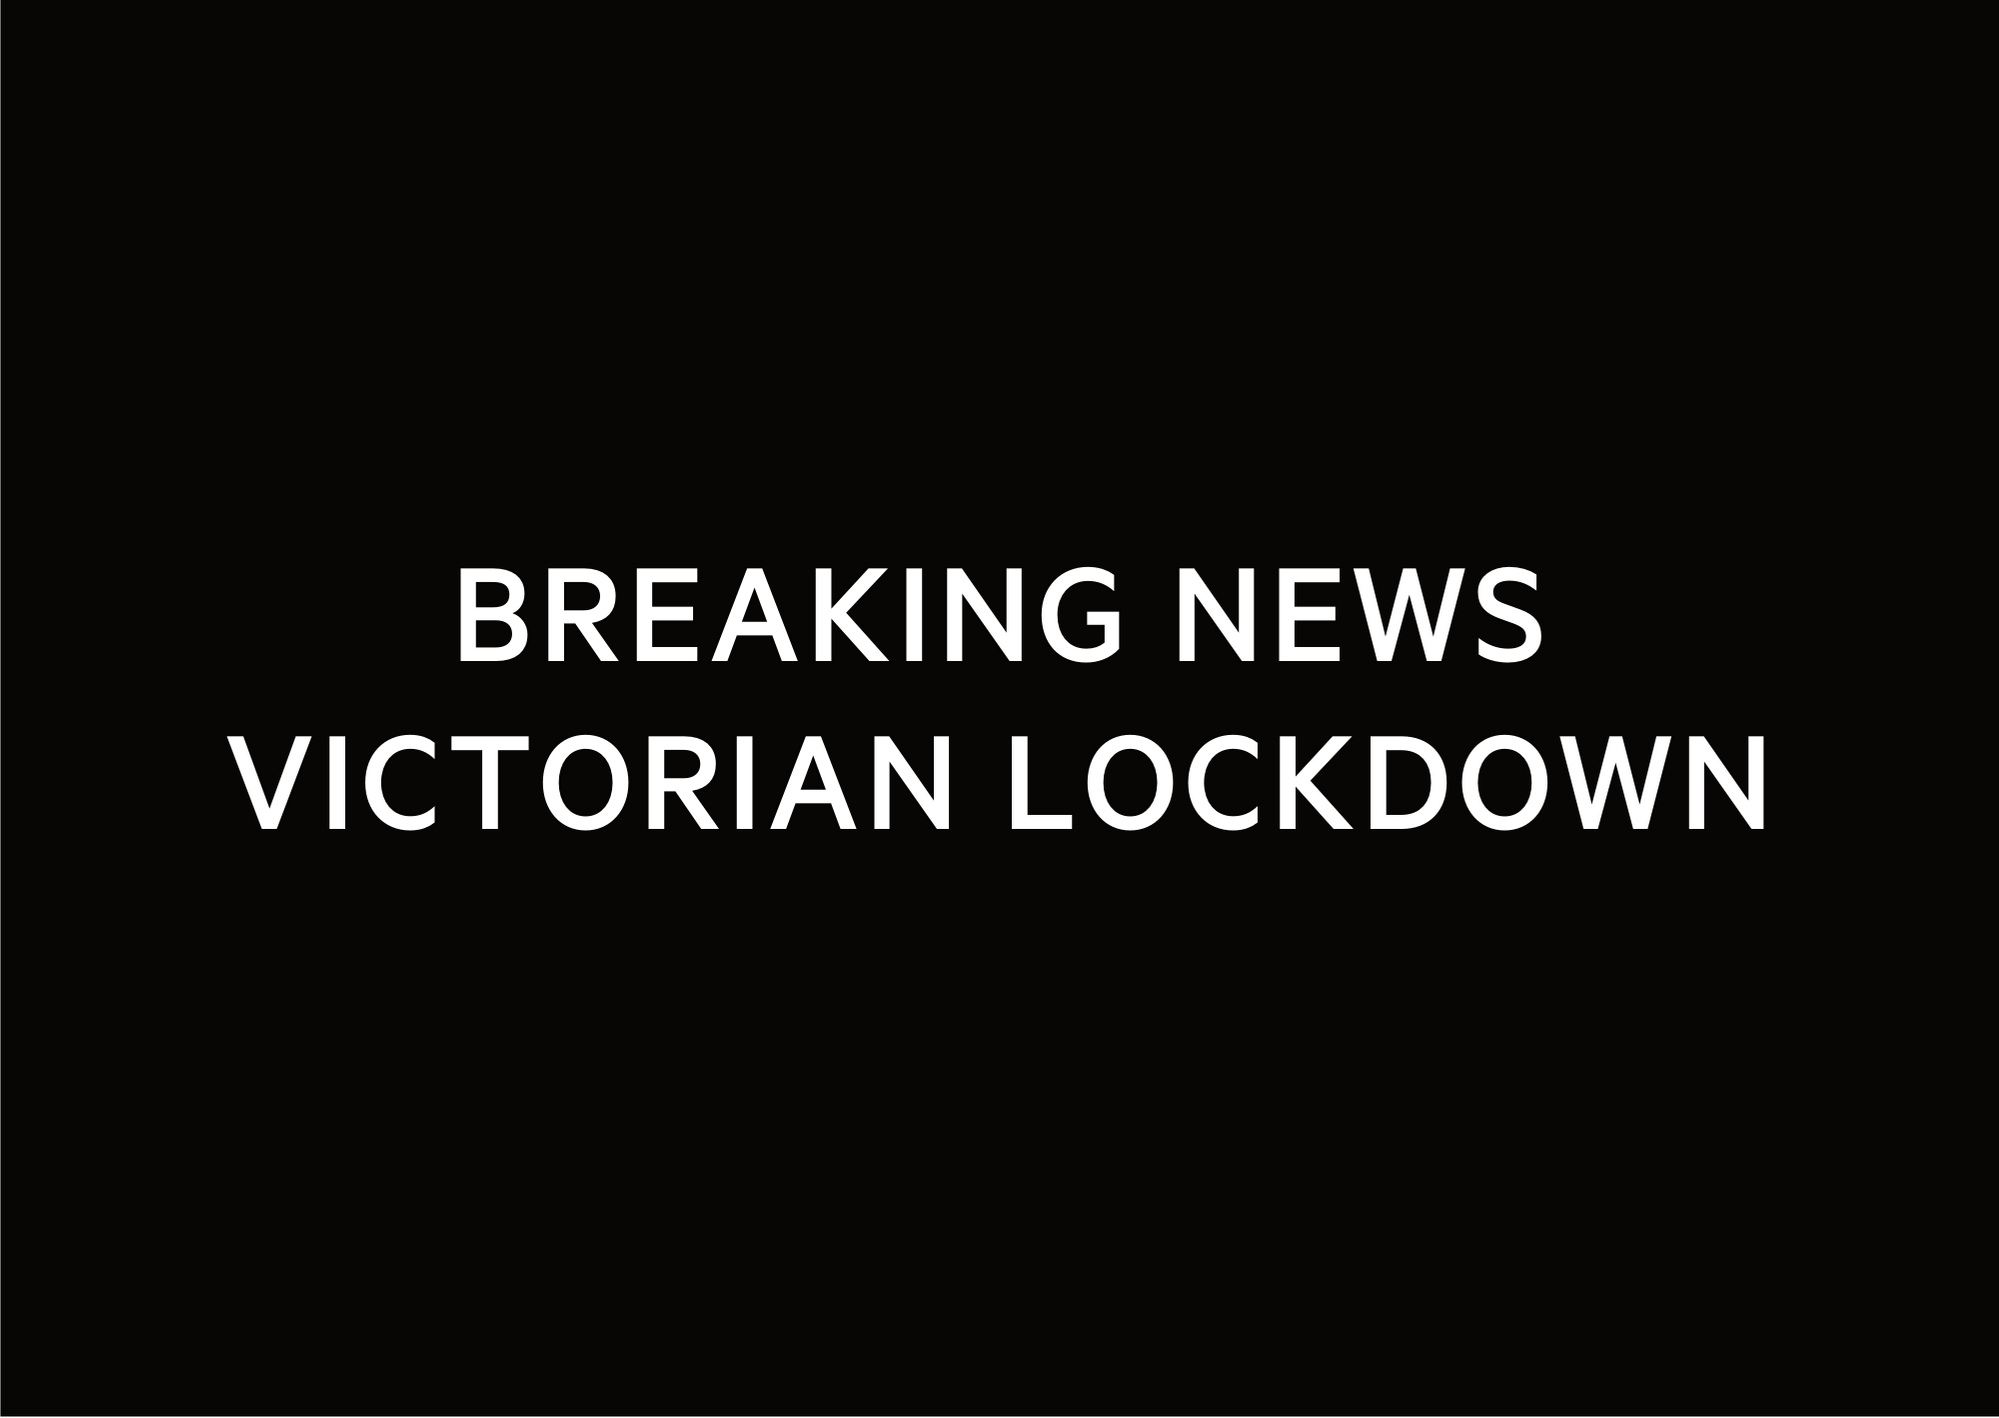 BREAKING NEWS – VICTORIAN LOCKDOWN